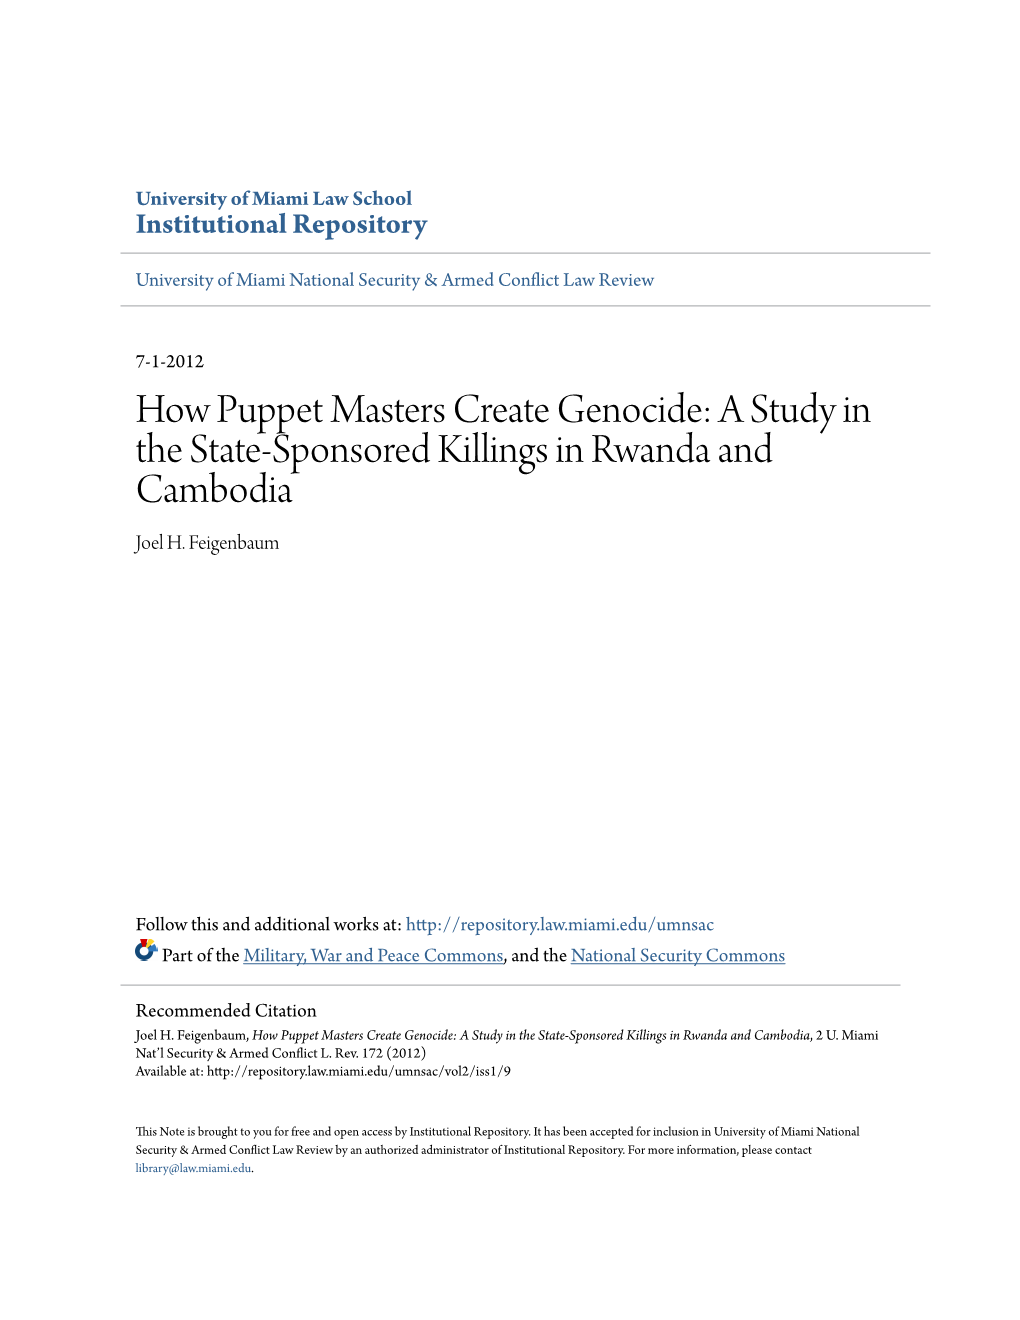 A Study in the State-Sponsored Killings in Rwanda and Cambodia Joel H